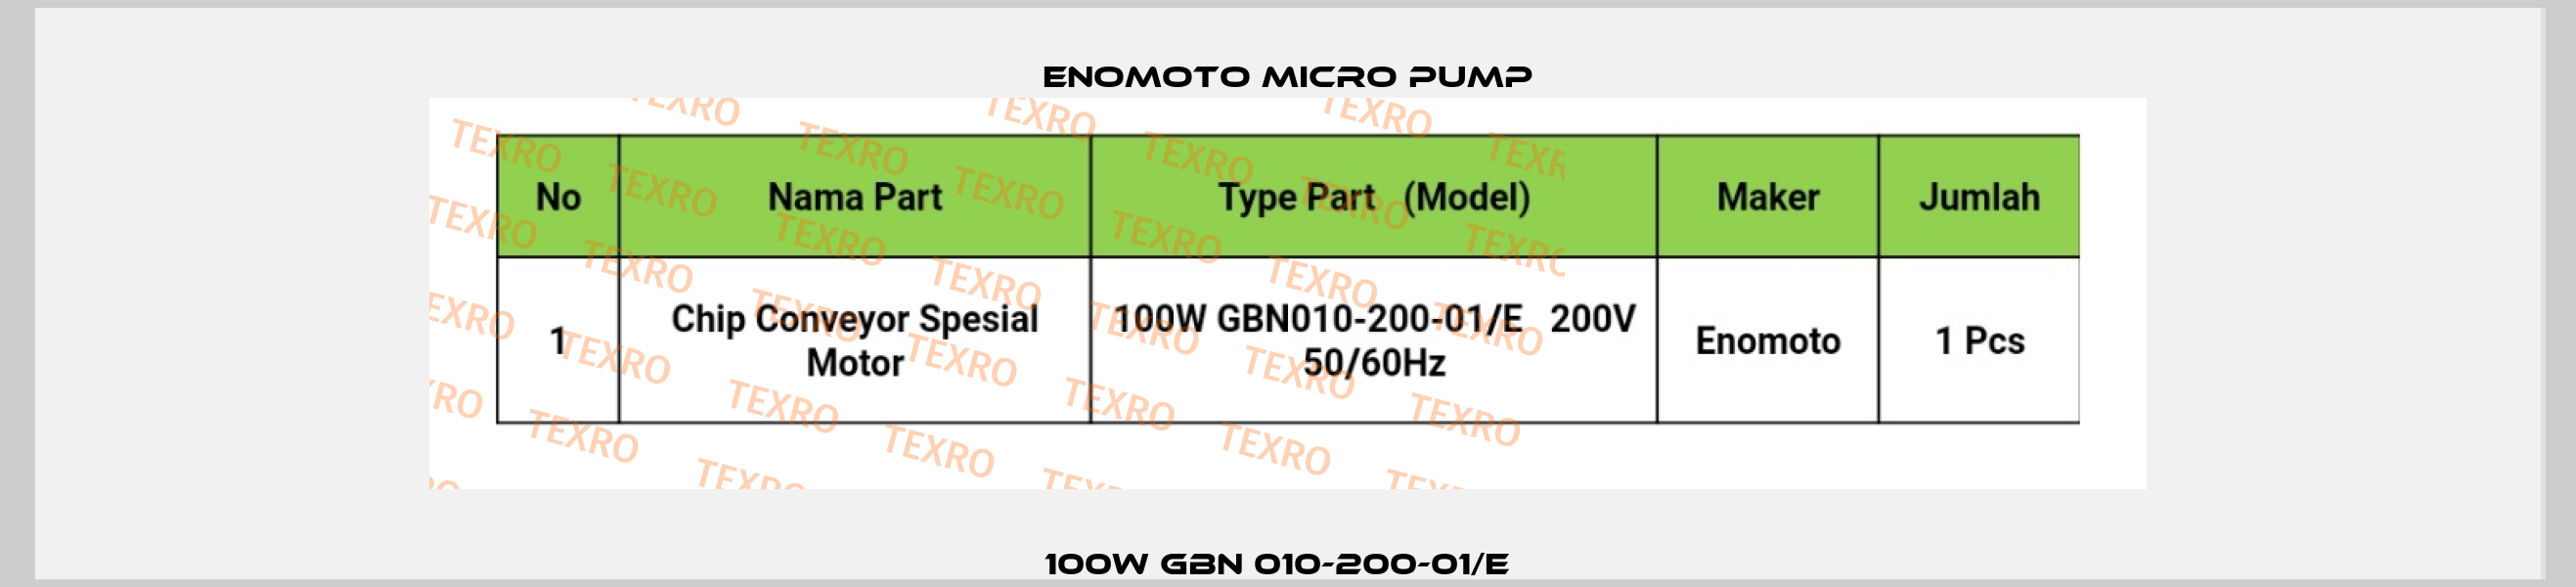 100W GBN 010-200-01/E   Enomoto Micro Pump